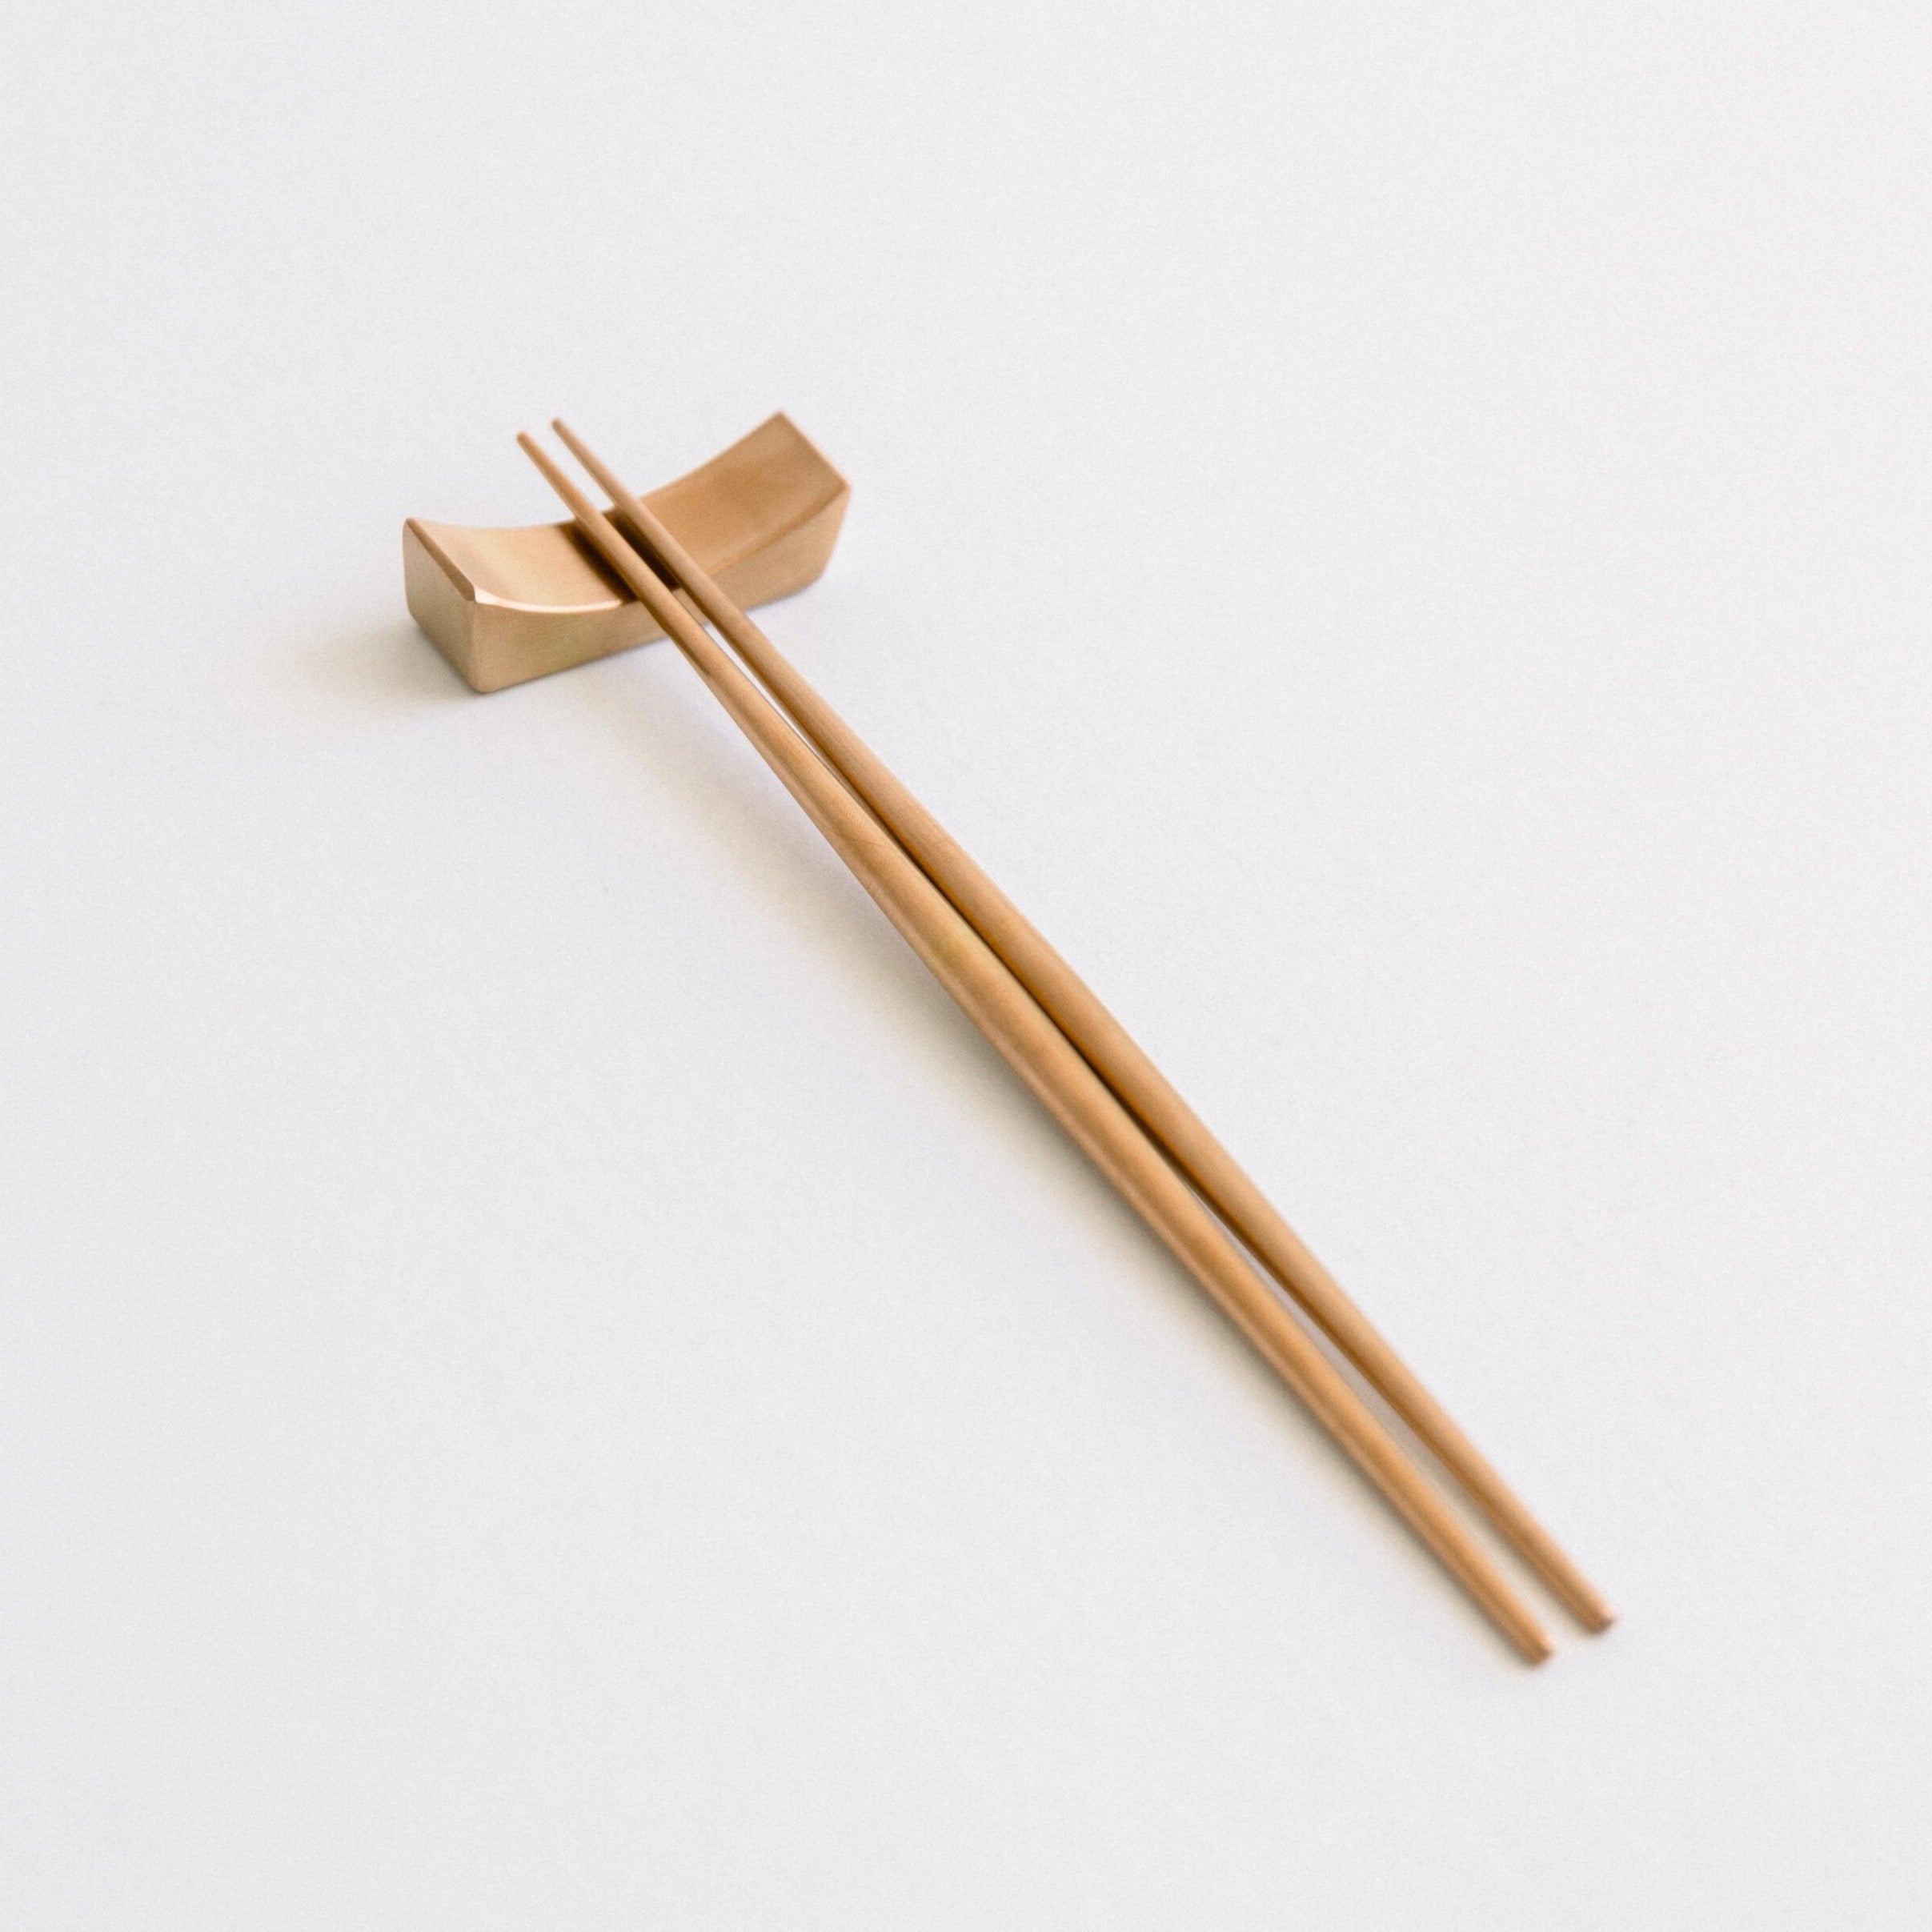 $17,000 Diamond Chopsticks Designed for Dining Experience